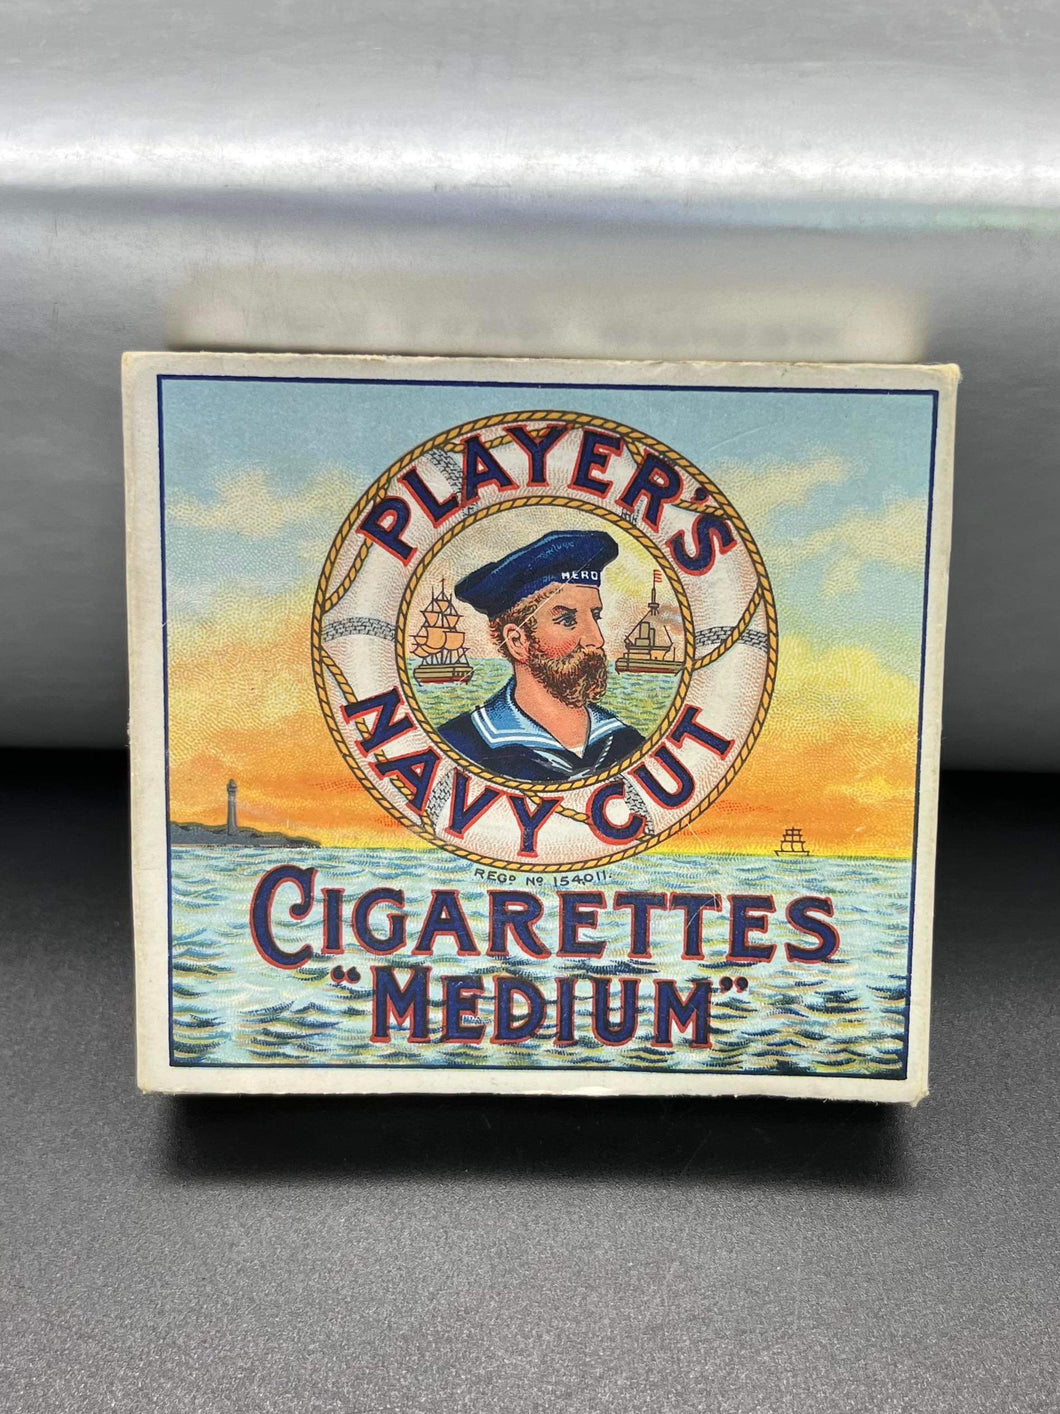 Player’s Navy Cut Medium Cigarette Packet